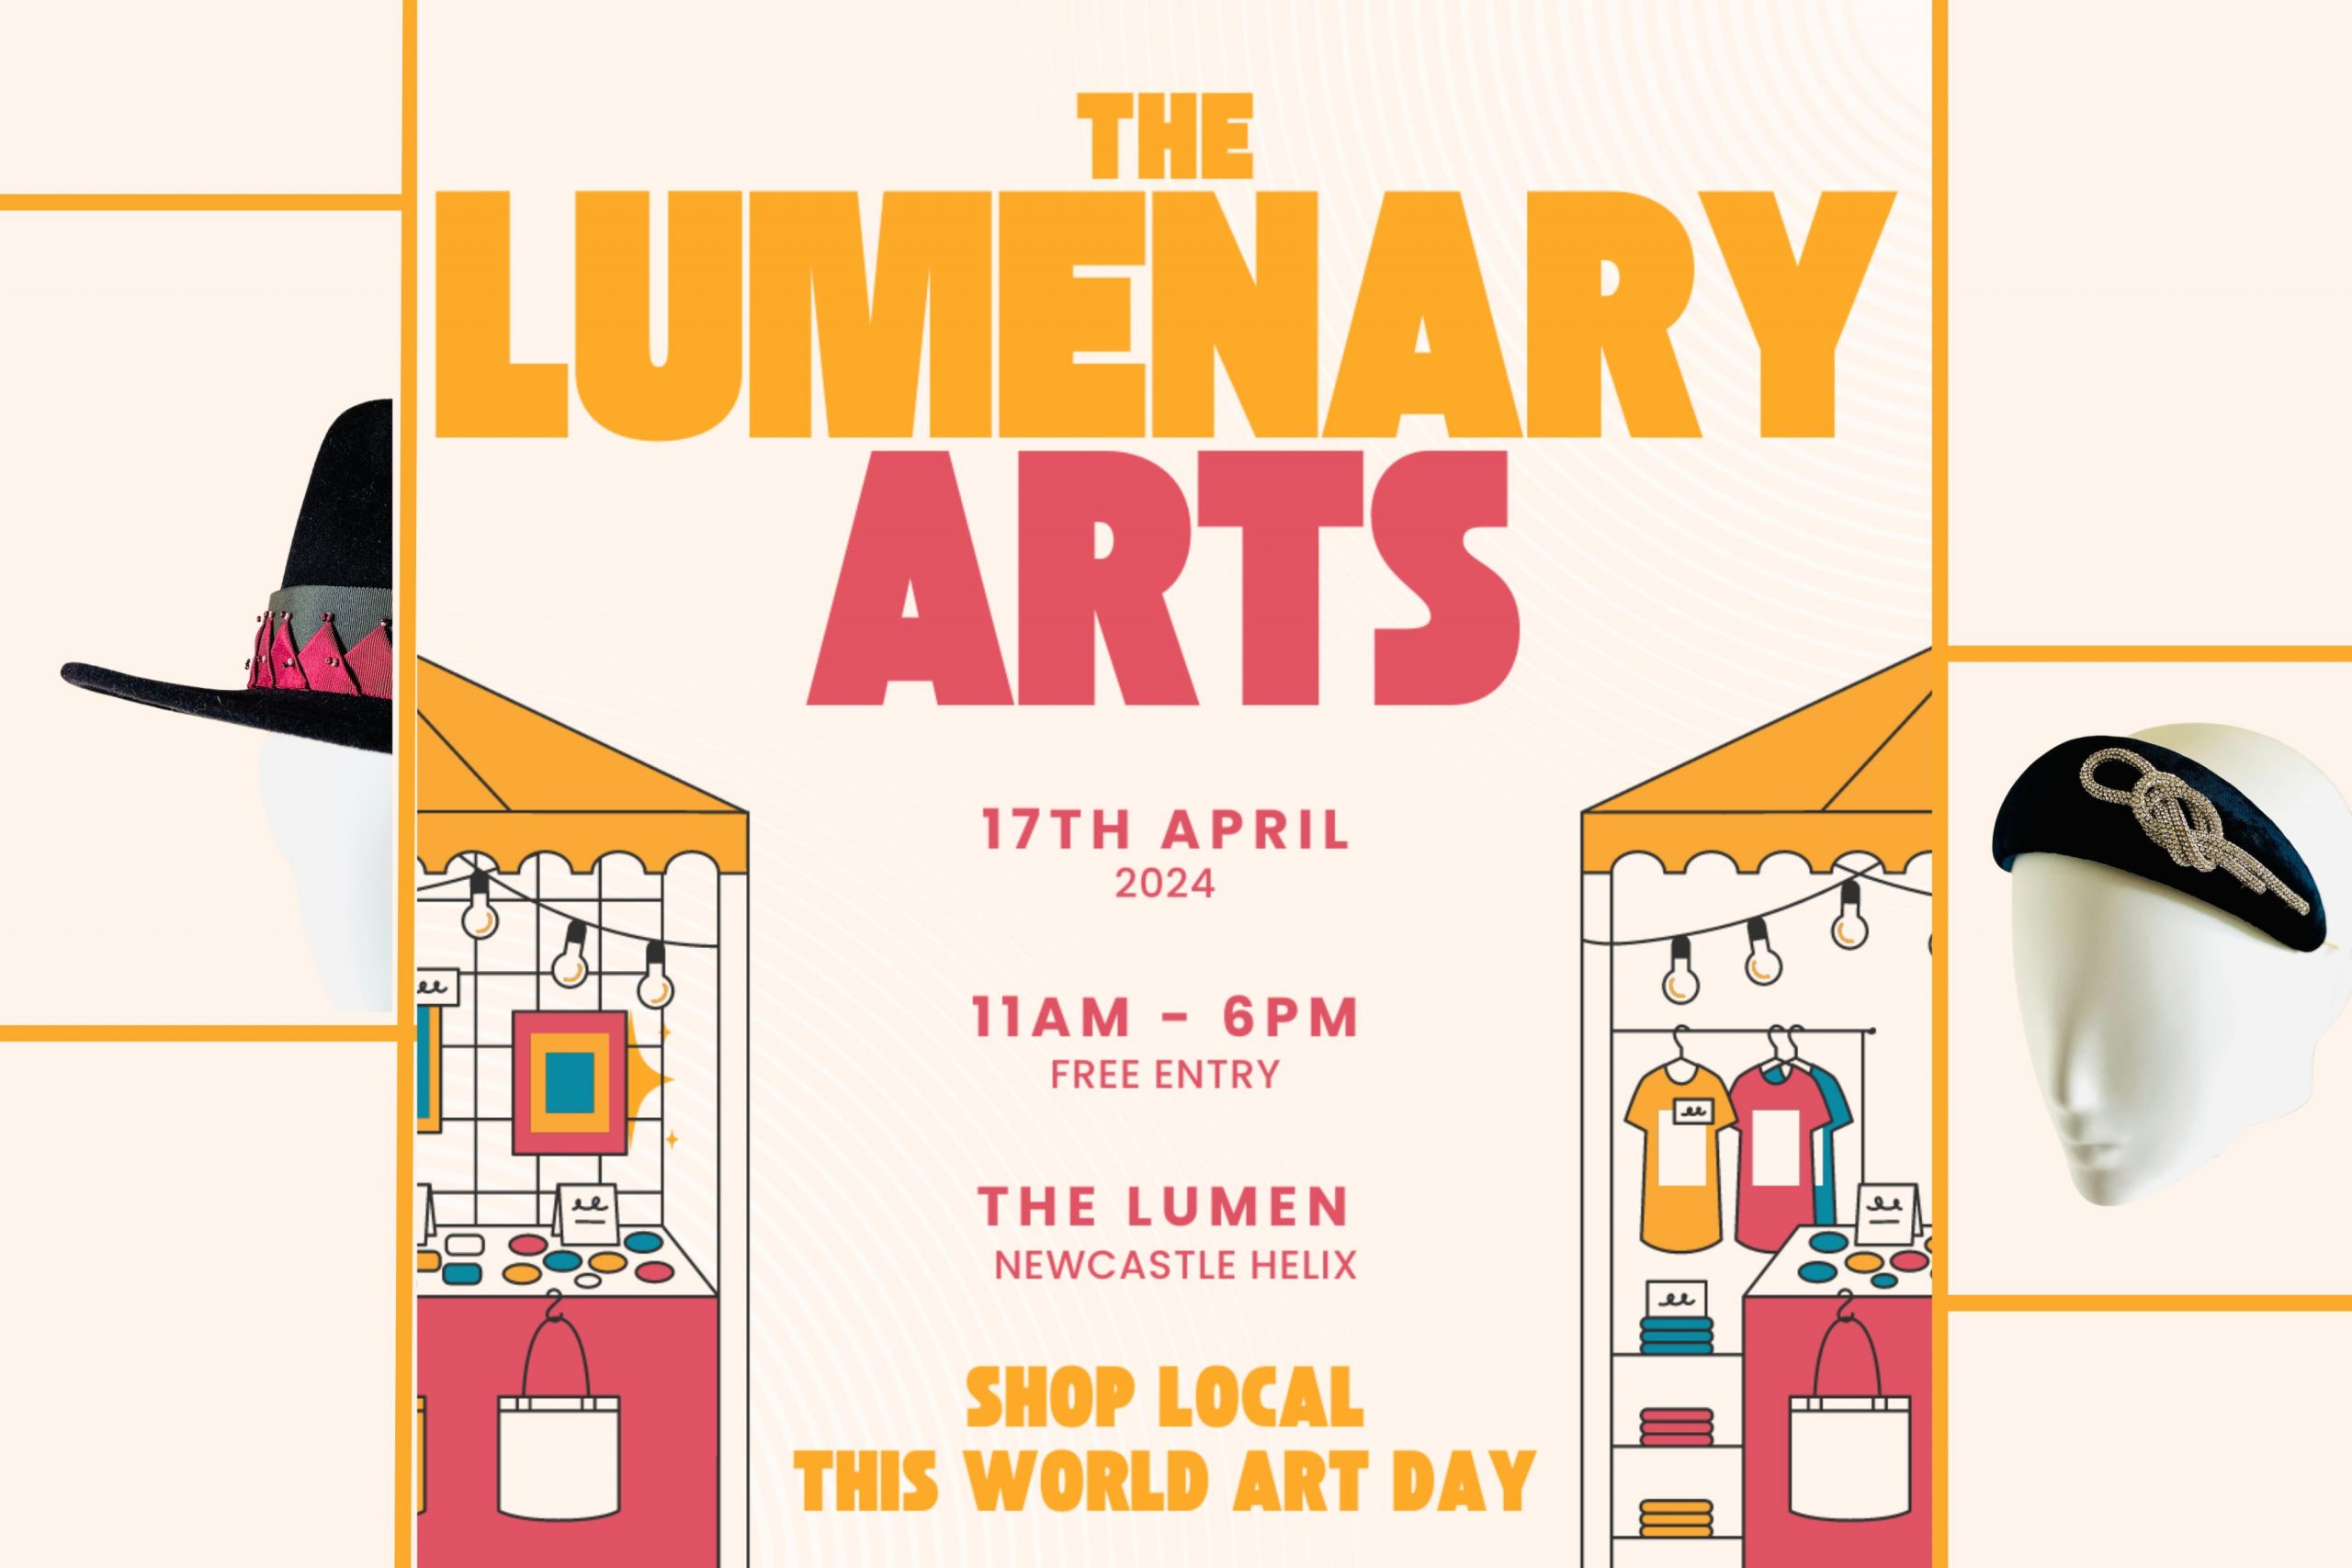 Luminary Arts - April 17th 2024 World Arts Day